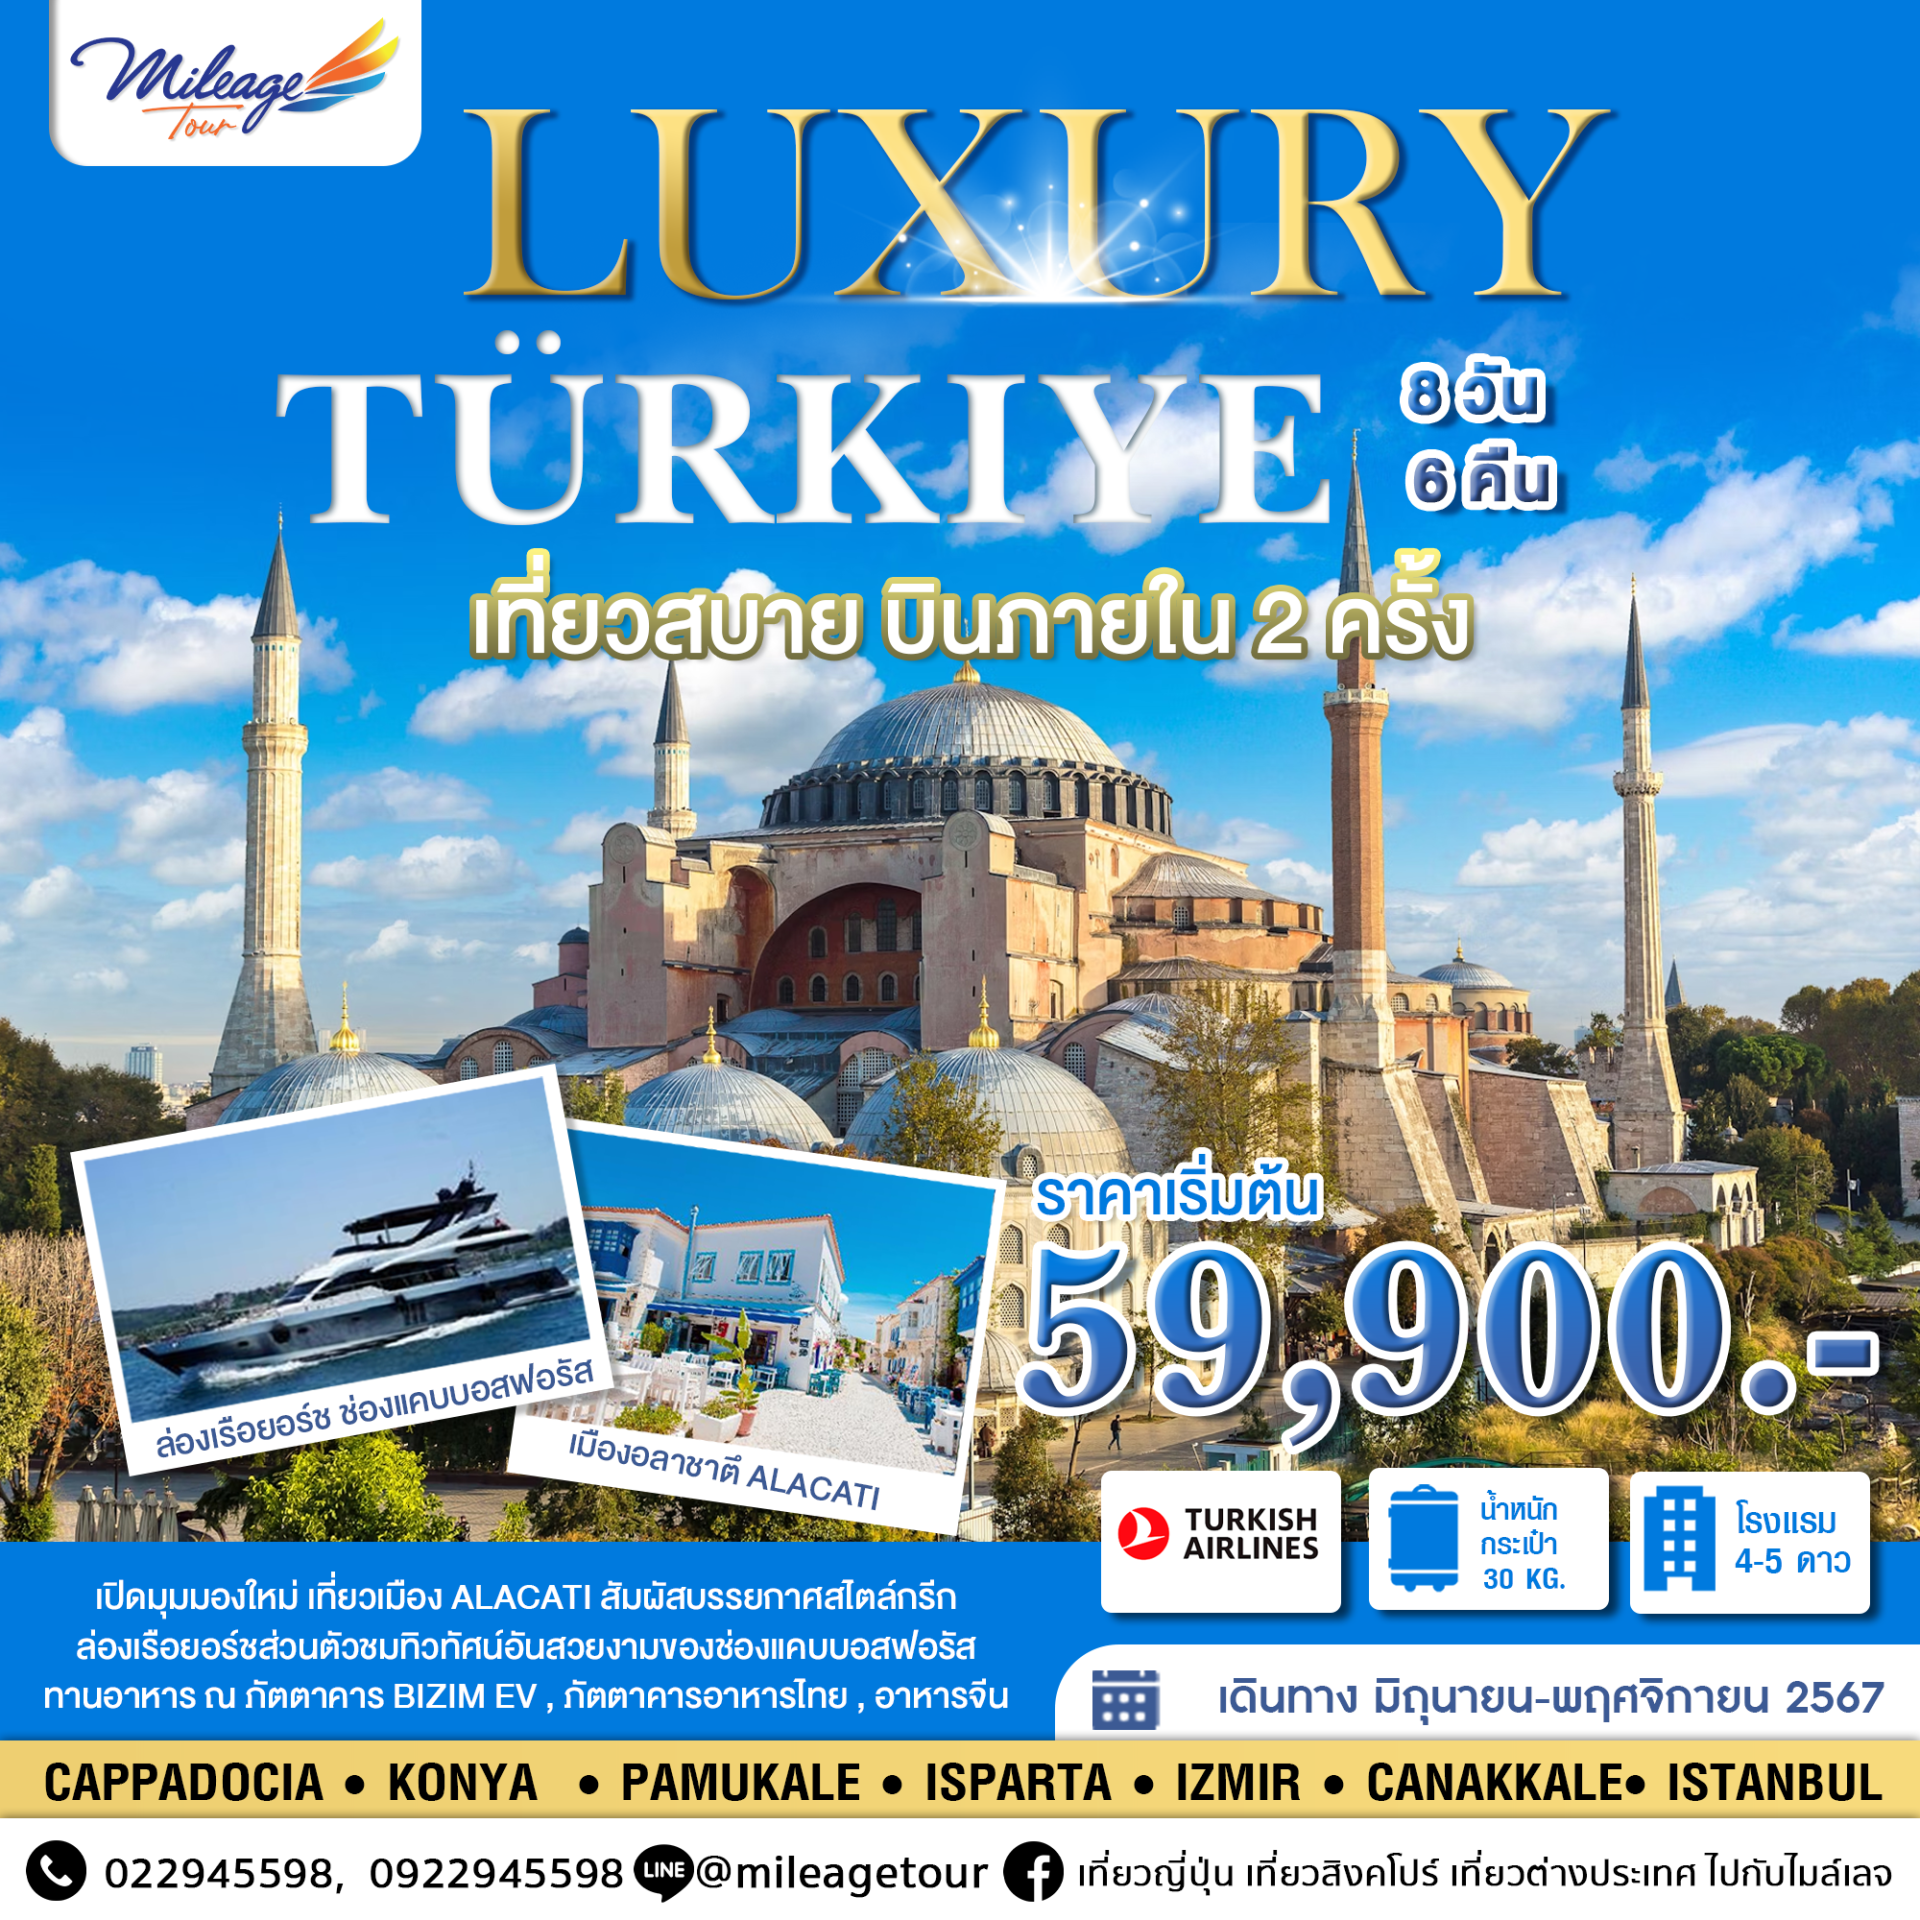 LUXURY TURKIYE 8 วัน 6 คืน เที่ยวสบาย บินภายใน 2 ครั้ง ราคาเริ่มต้น THB 59900.-เดินทางมิถุนายน ถึง พฤศจิกายน 2567